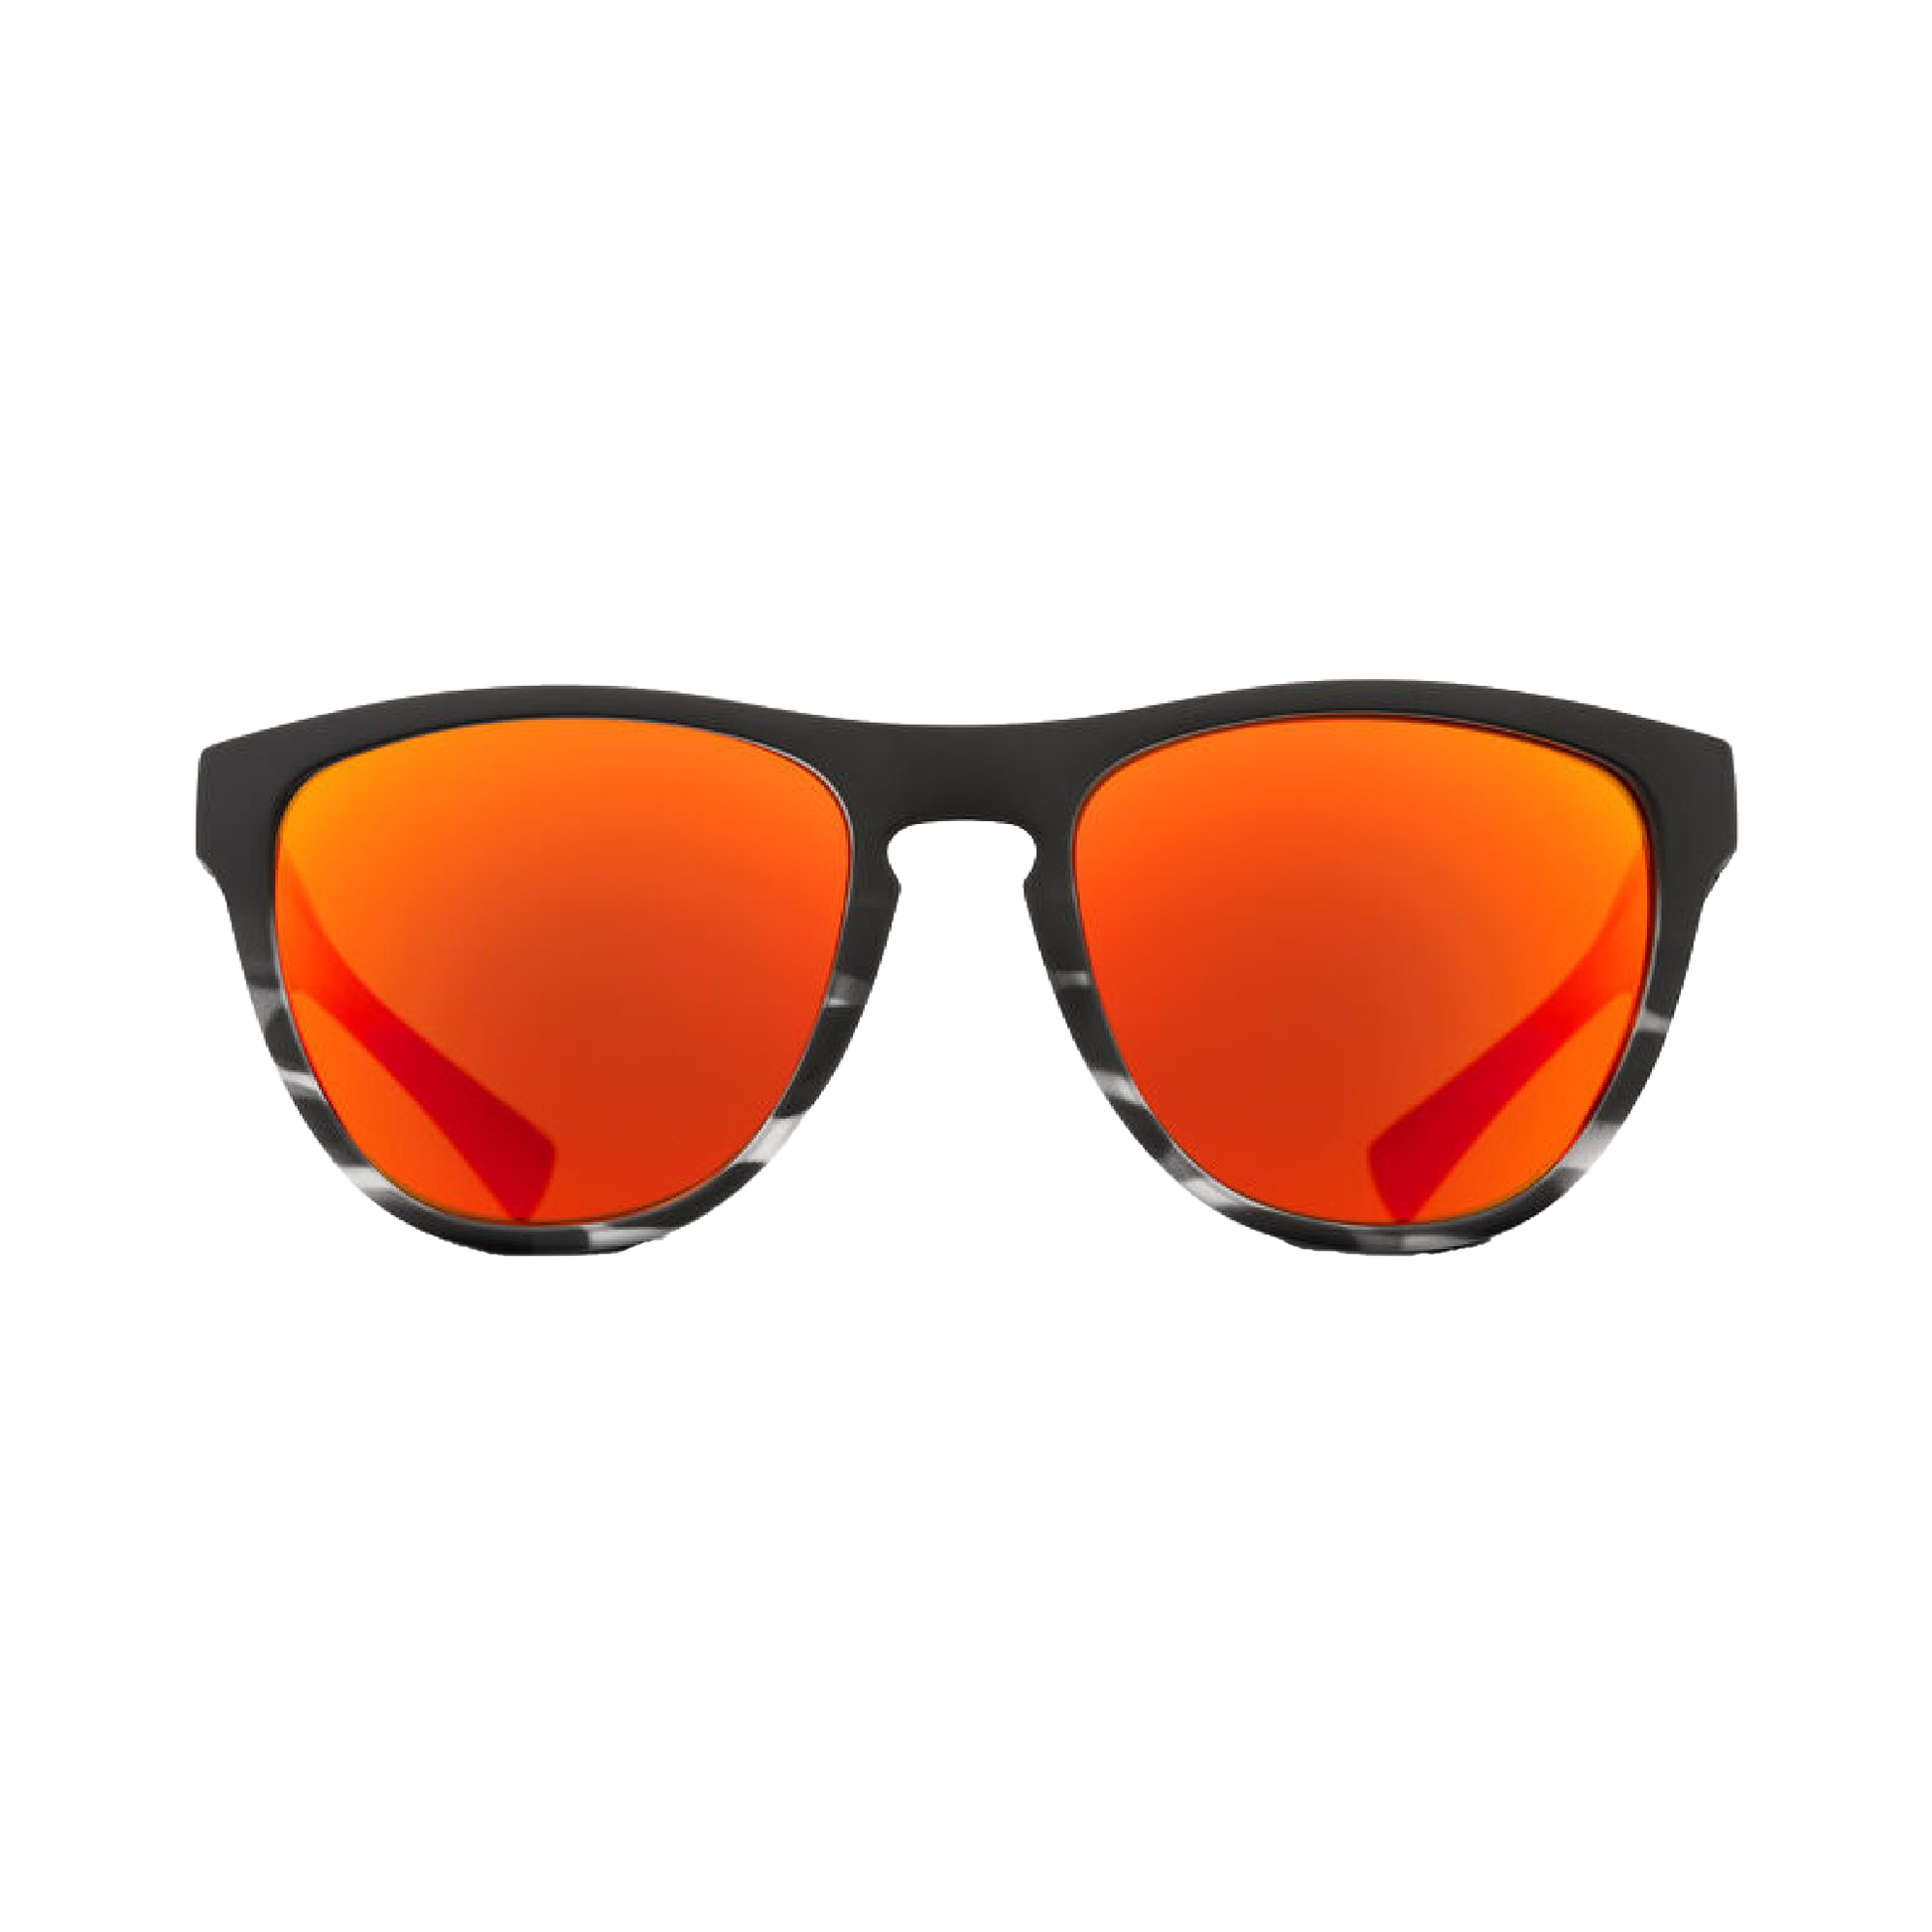 Giro Mills Sunglasses Matte Black Tortoise Fade VIVID Ember Sunglasses